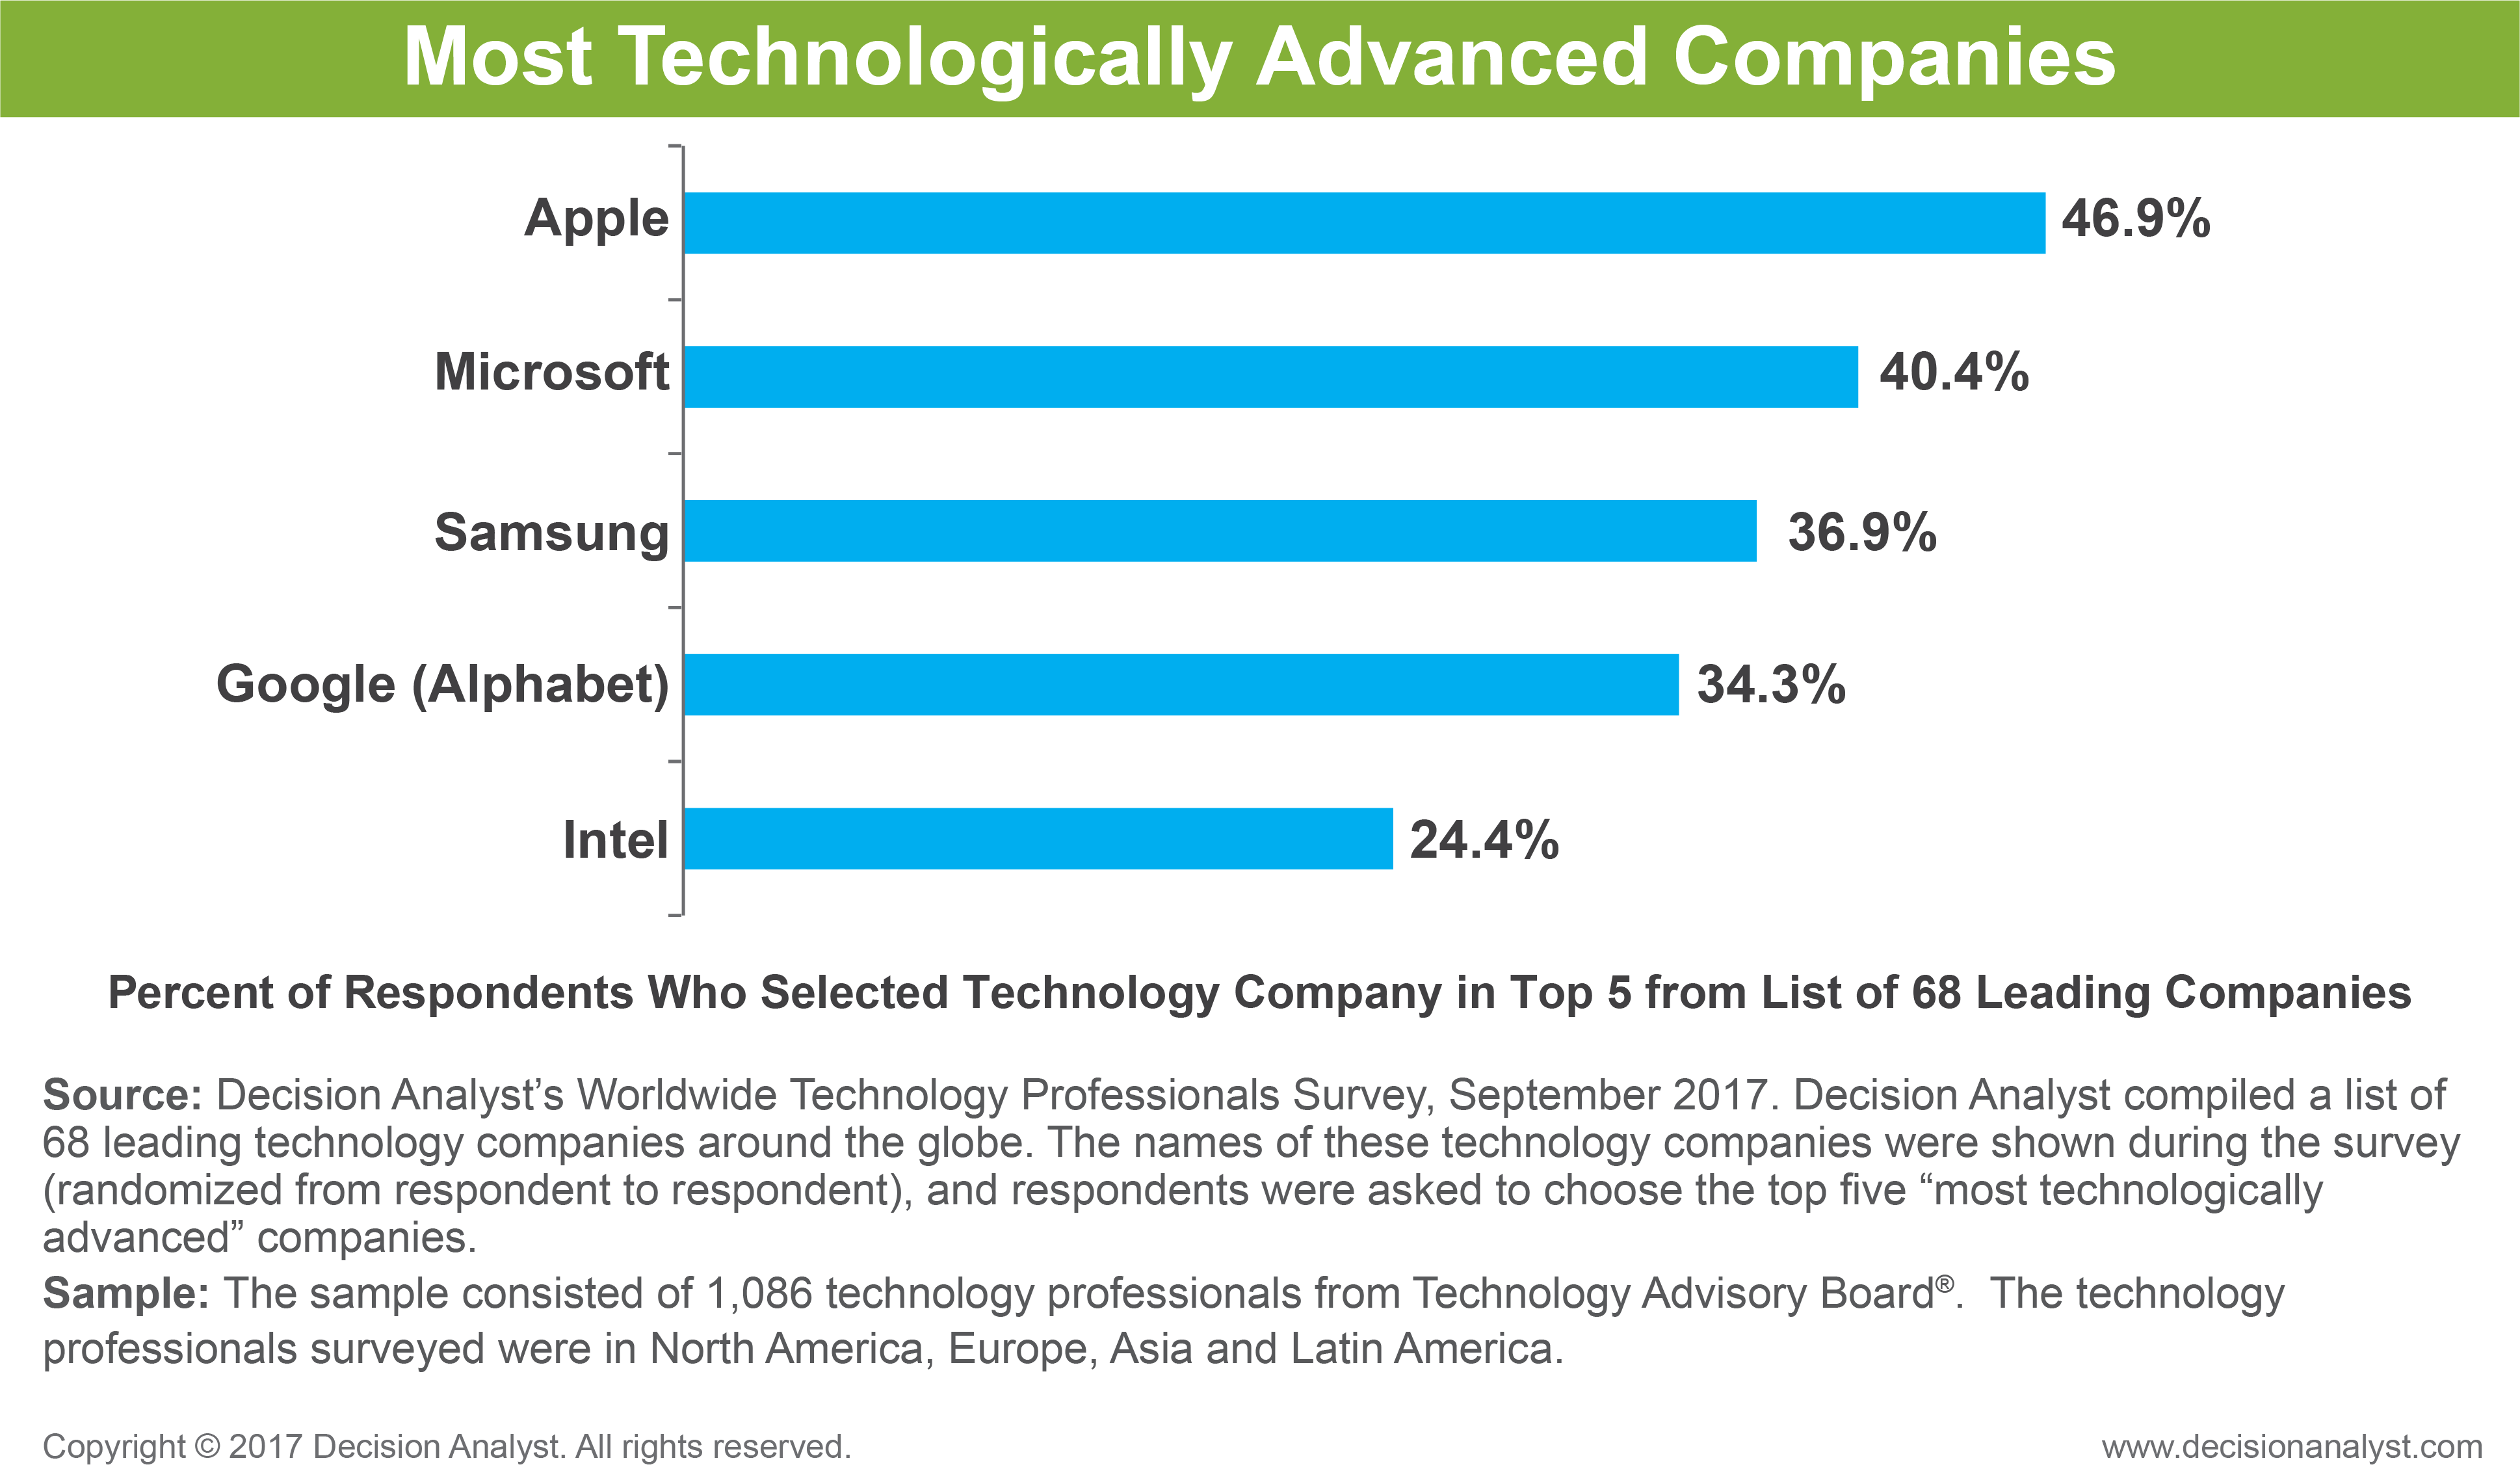 Top 5 Technologically Advanced Companies